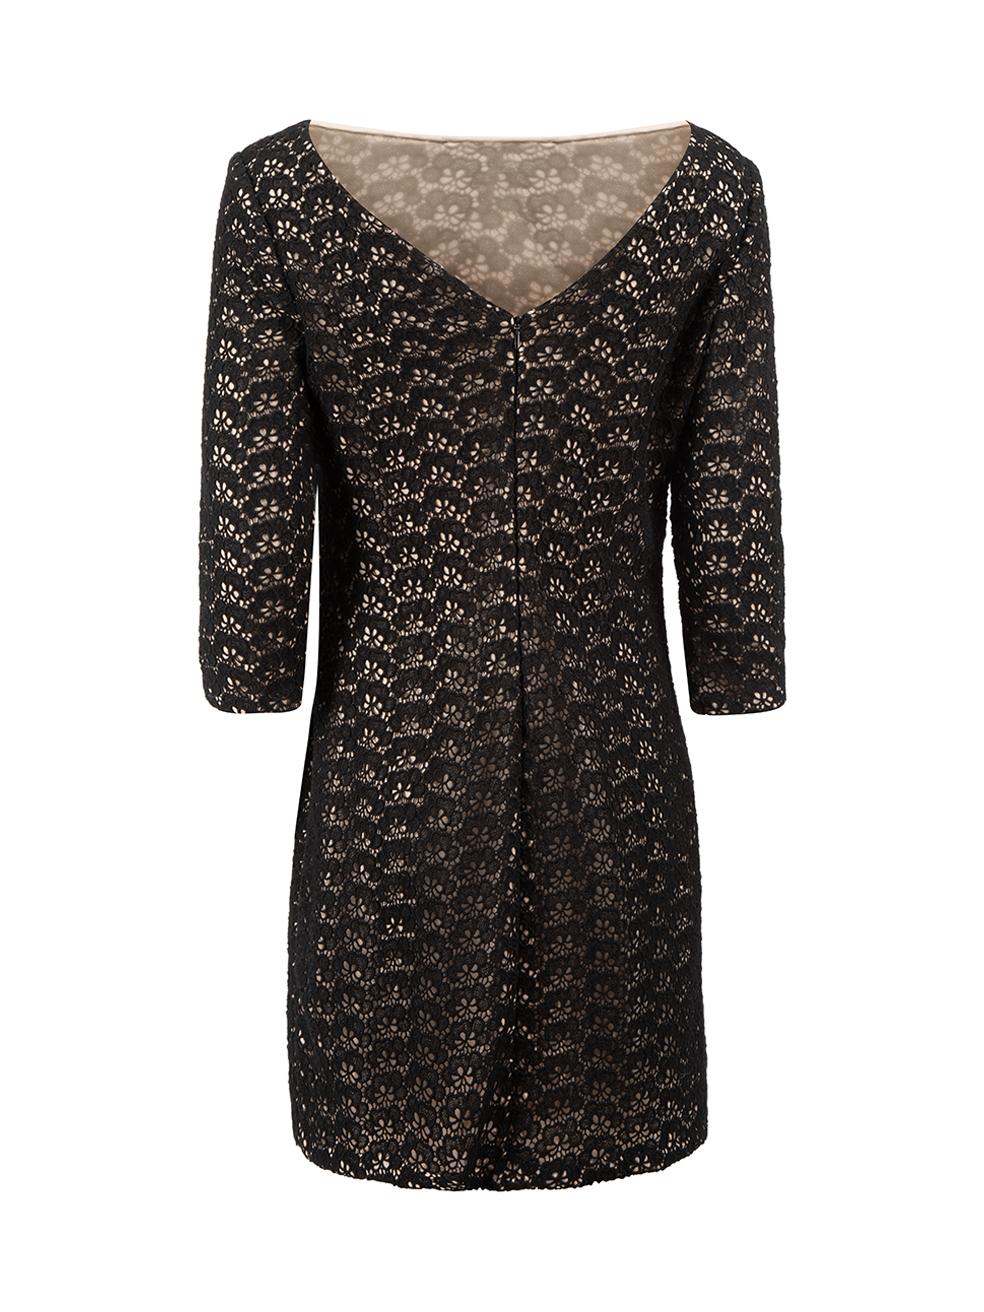 Black Lace Sarita Mini Dress Size XL In New Condition For Sale In London, GB